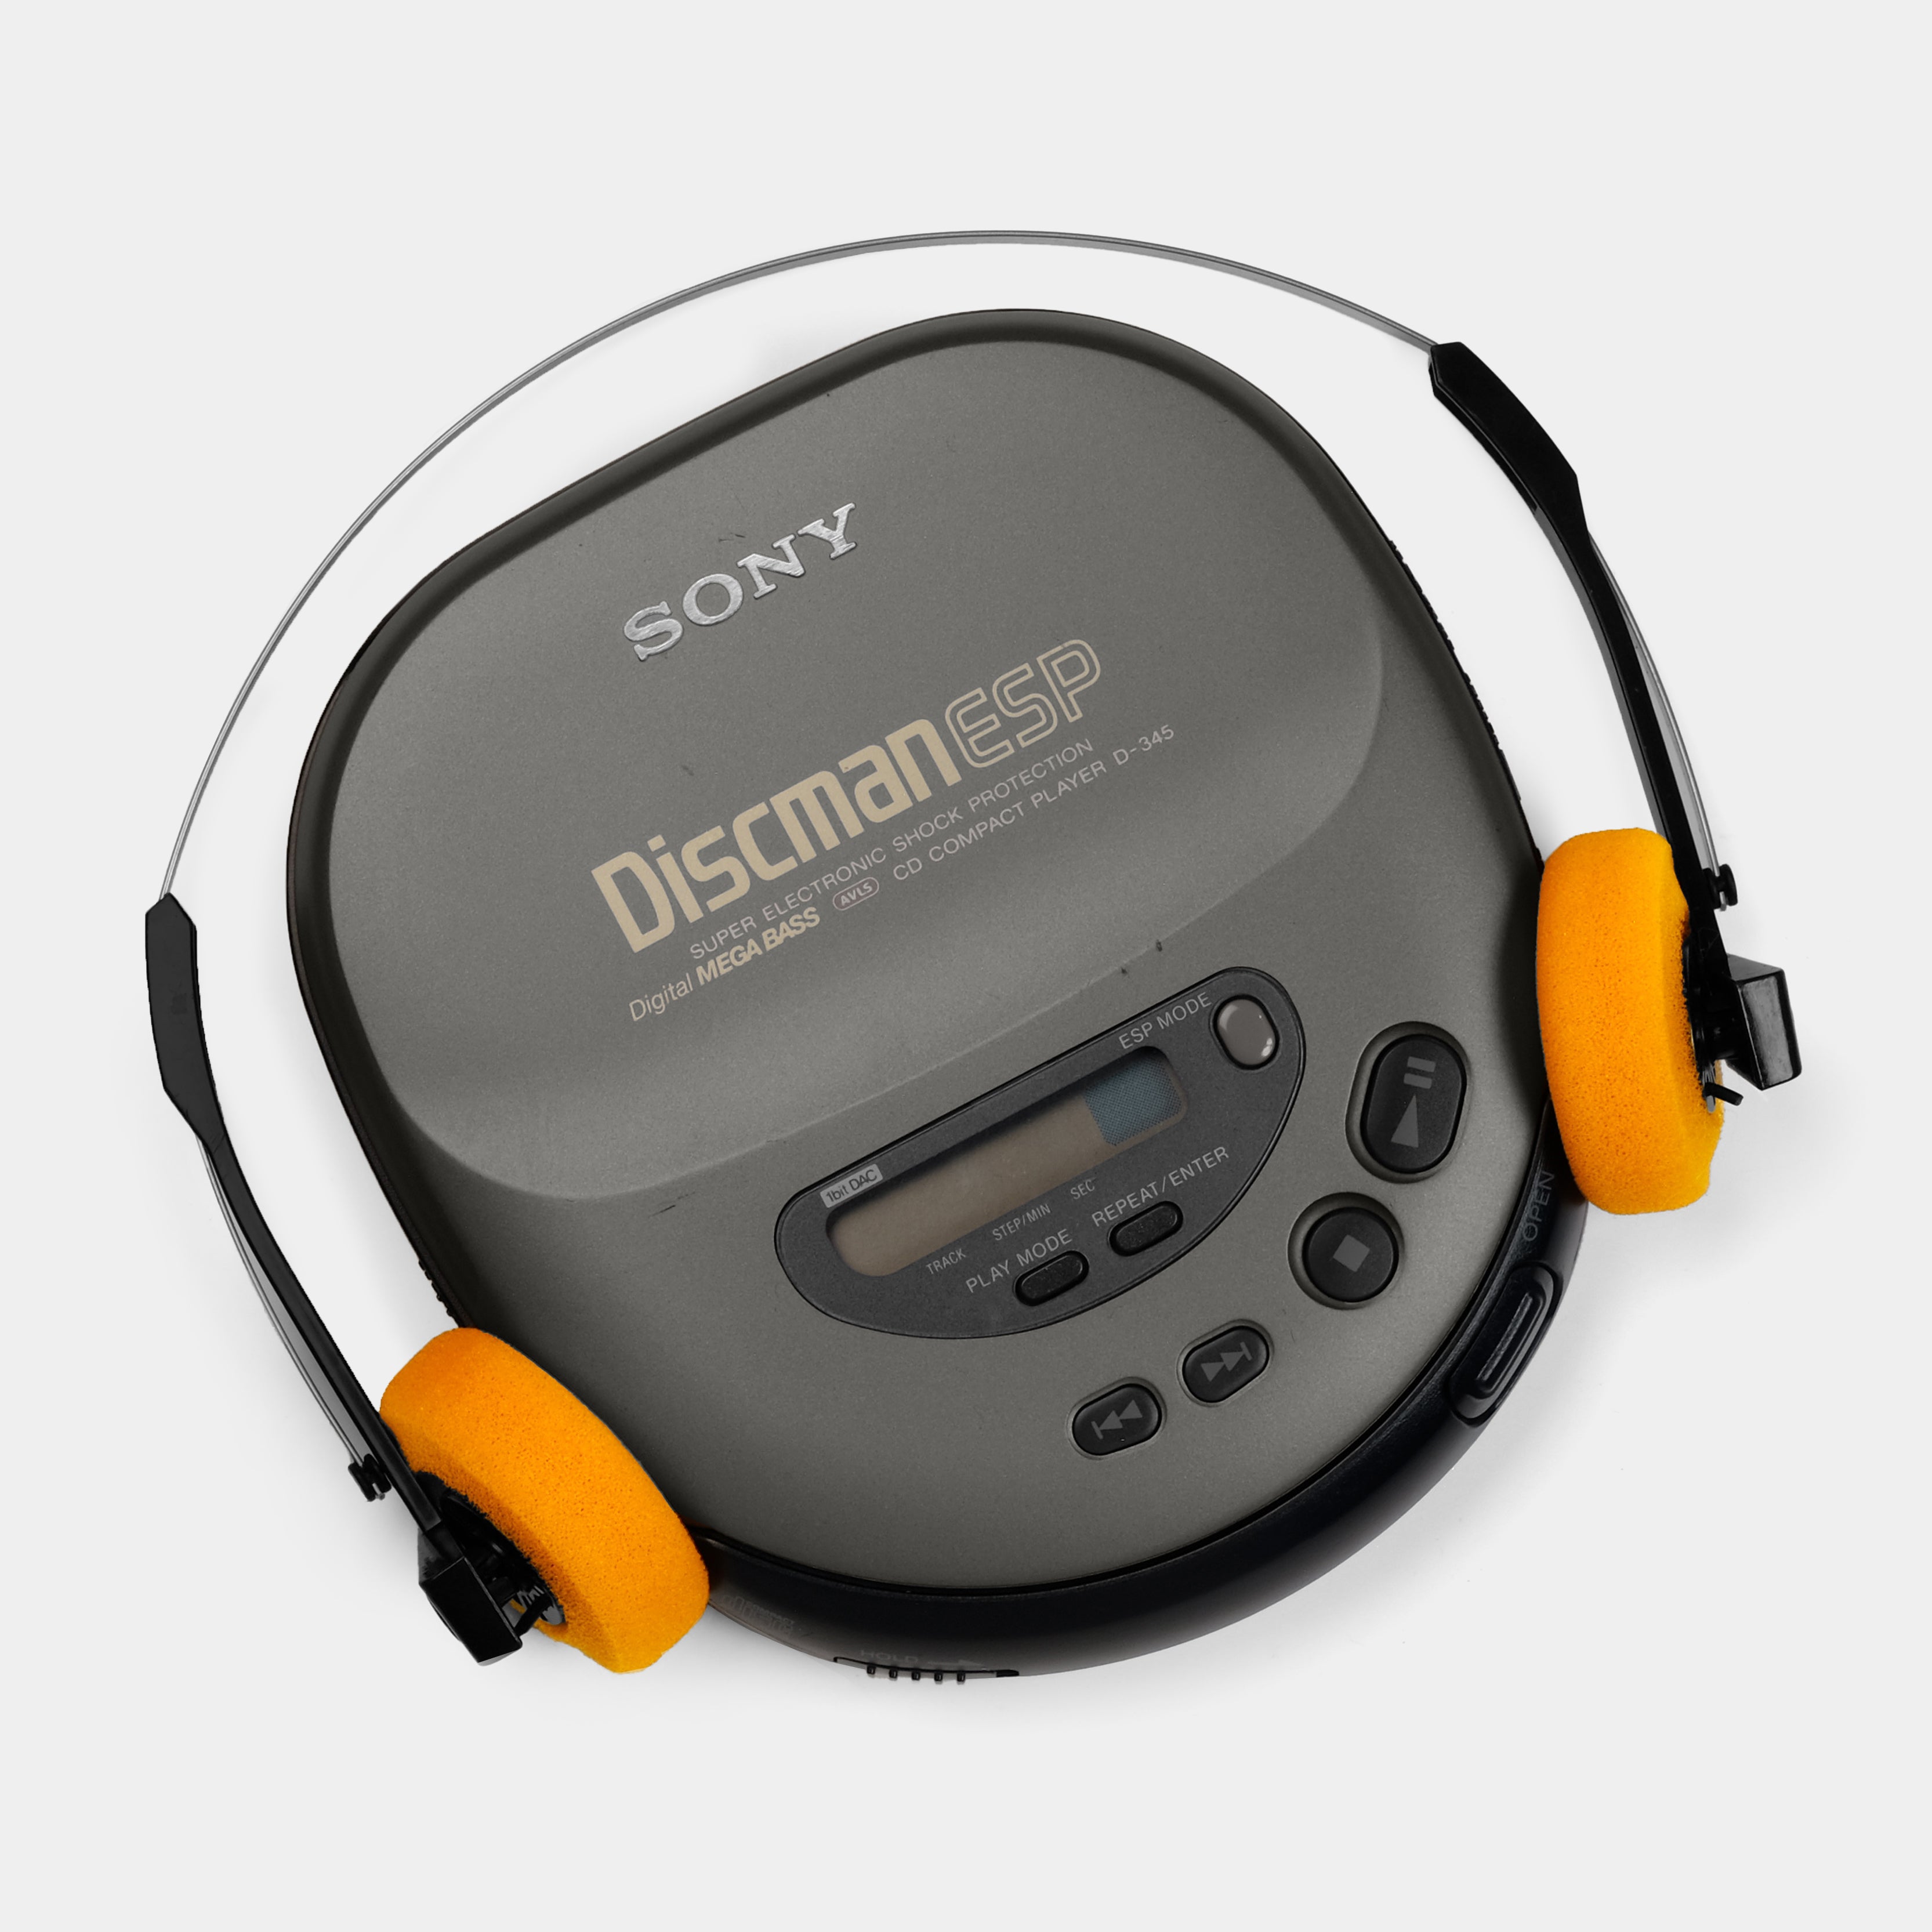 Sony Discman D-345 Portable CD Player